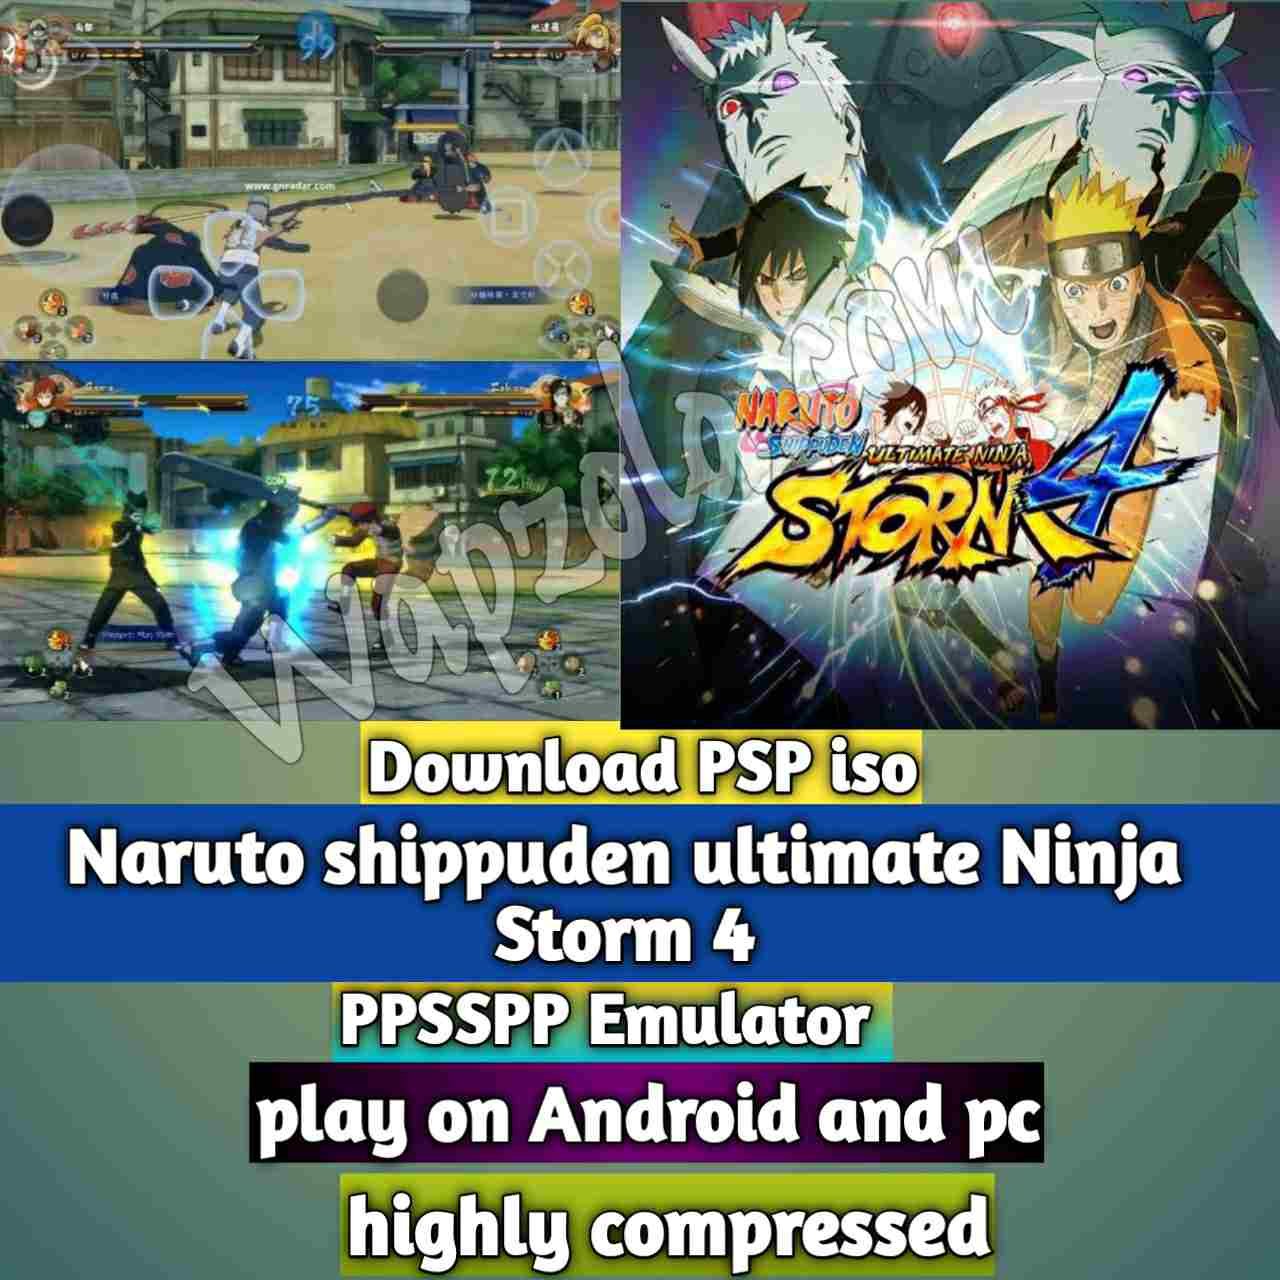 [Descargar] Naruto shippuden ultimate Ninja Storm 4 Mod iso ppsspp emulador – PSP APK Iso Rom altamente comprimido 800MB